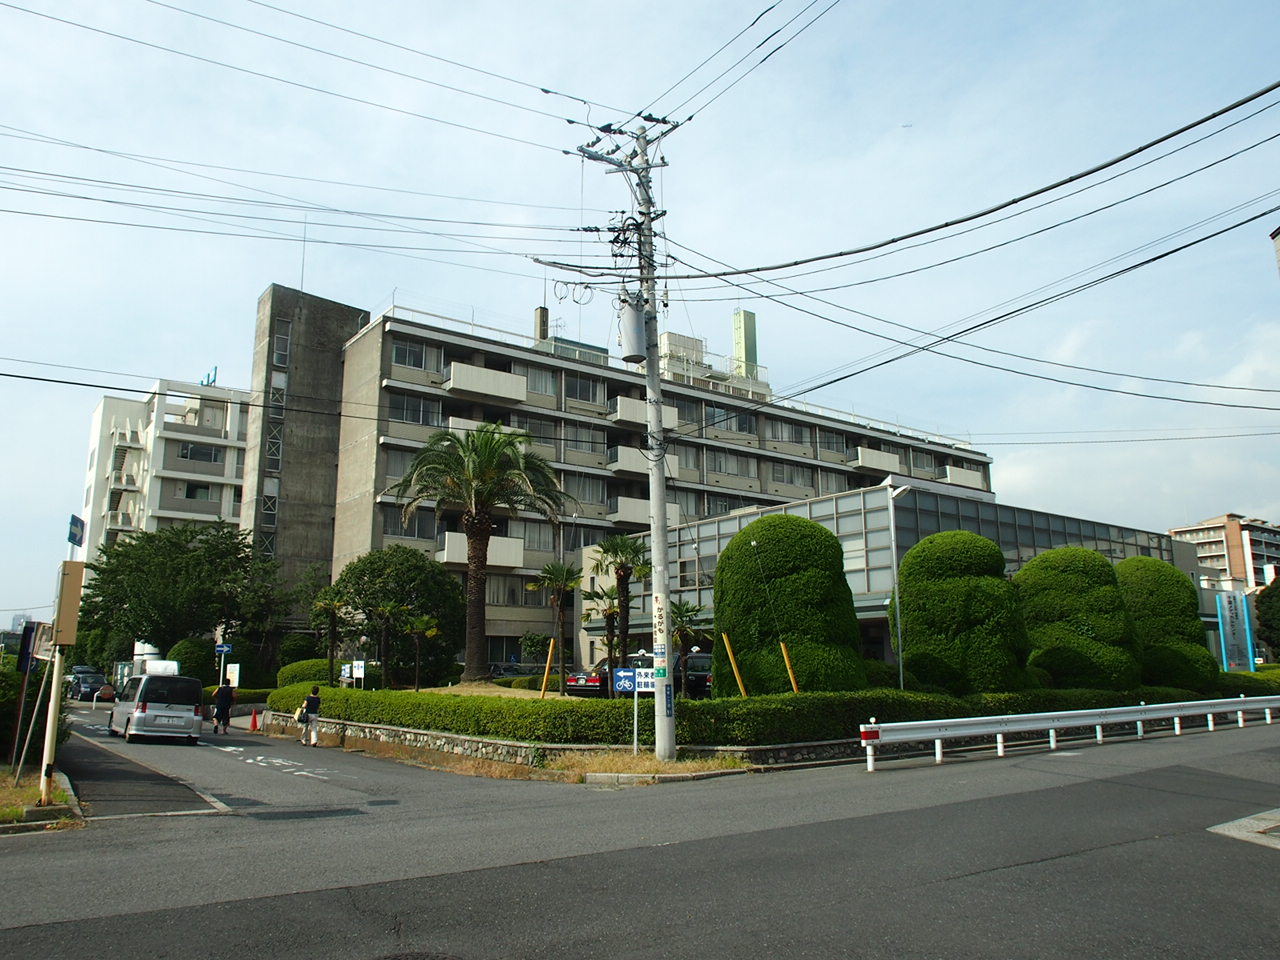 Hospital. 366m to Chiba Medical Center (hospital)